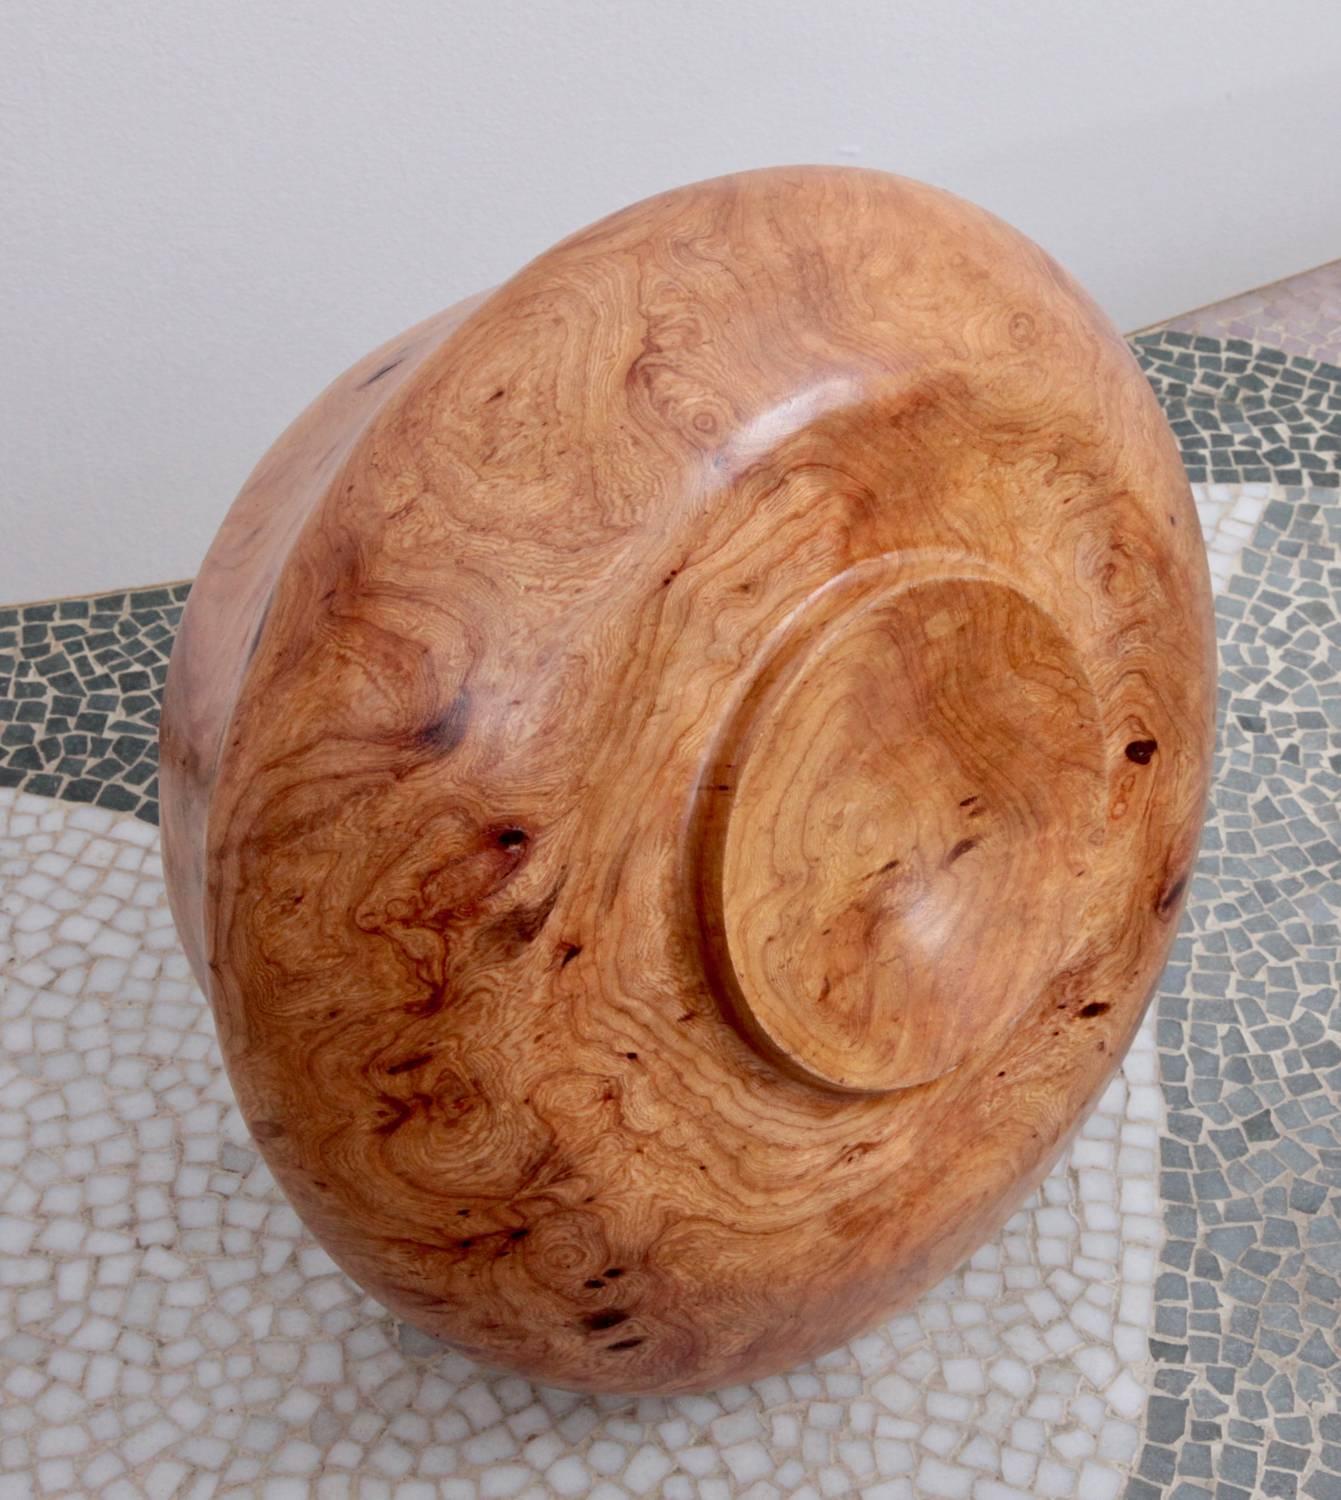 One of a kind large turned wood bowl by German Craftsmen Eckart Mohlenbeck in elmwood with.

